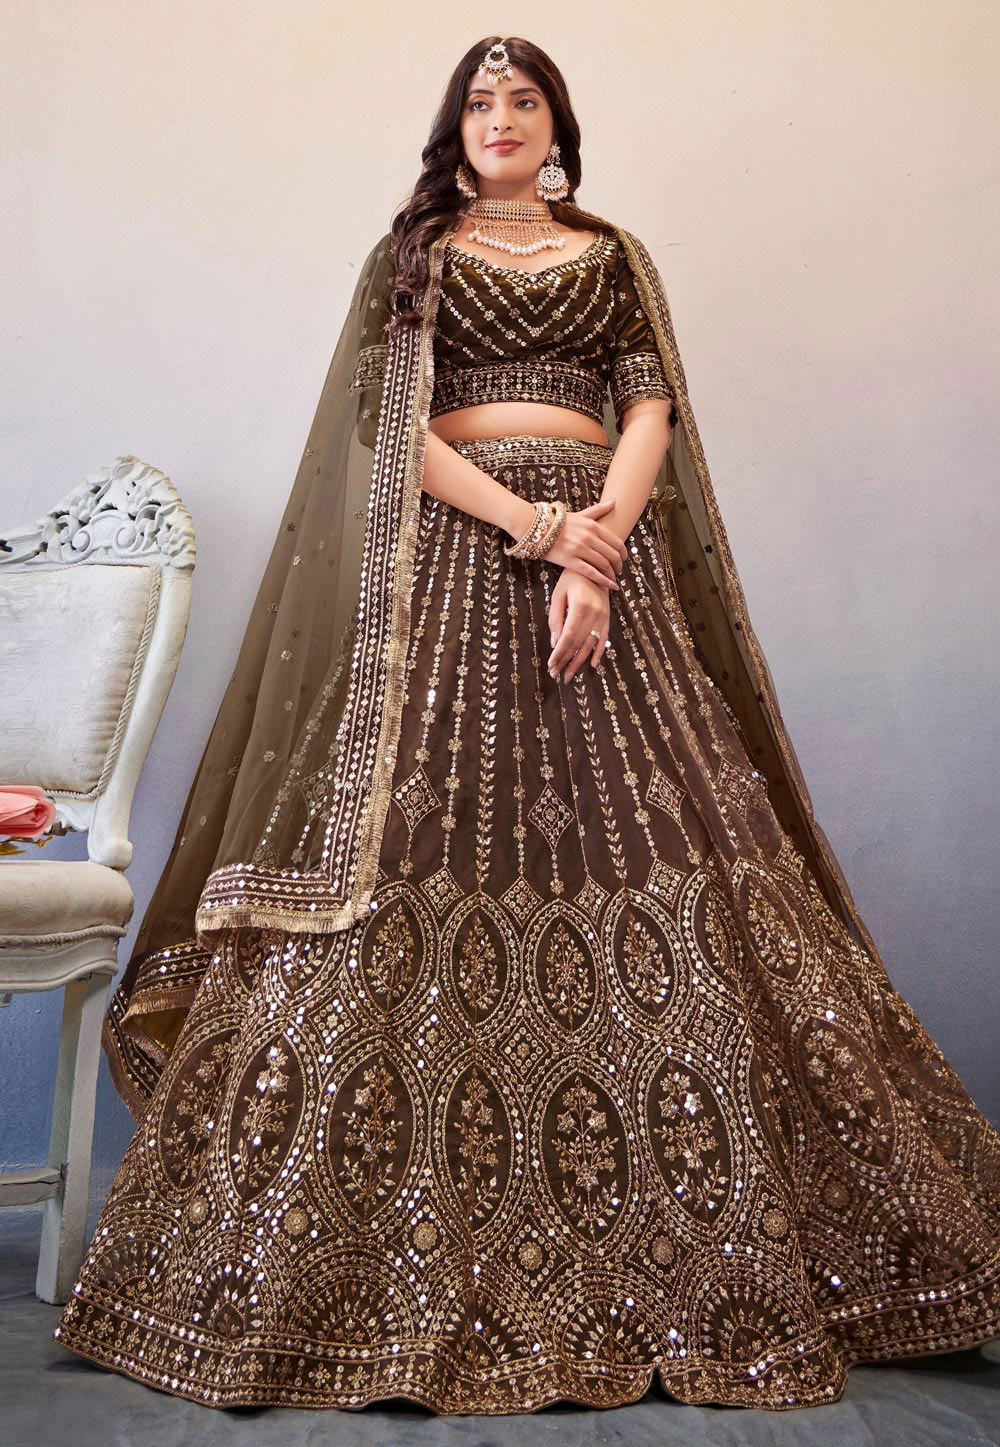 सब्यसाची के डिजाइनर लहंगे दुल्हन को देंगे Royal Look - sabyasachi designer lehenga  collections for brides-mobile